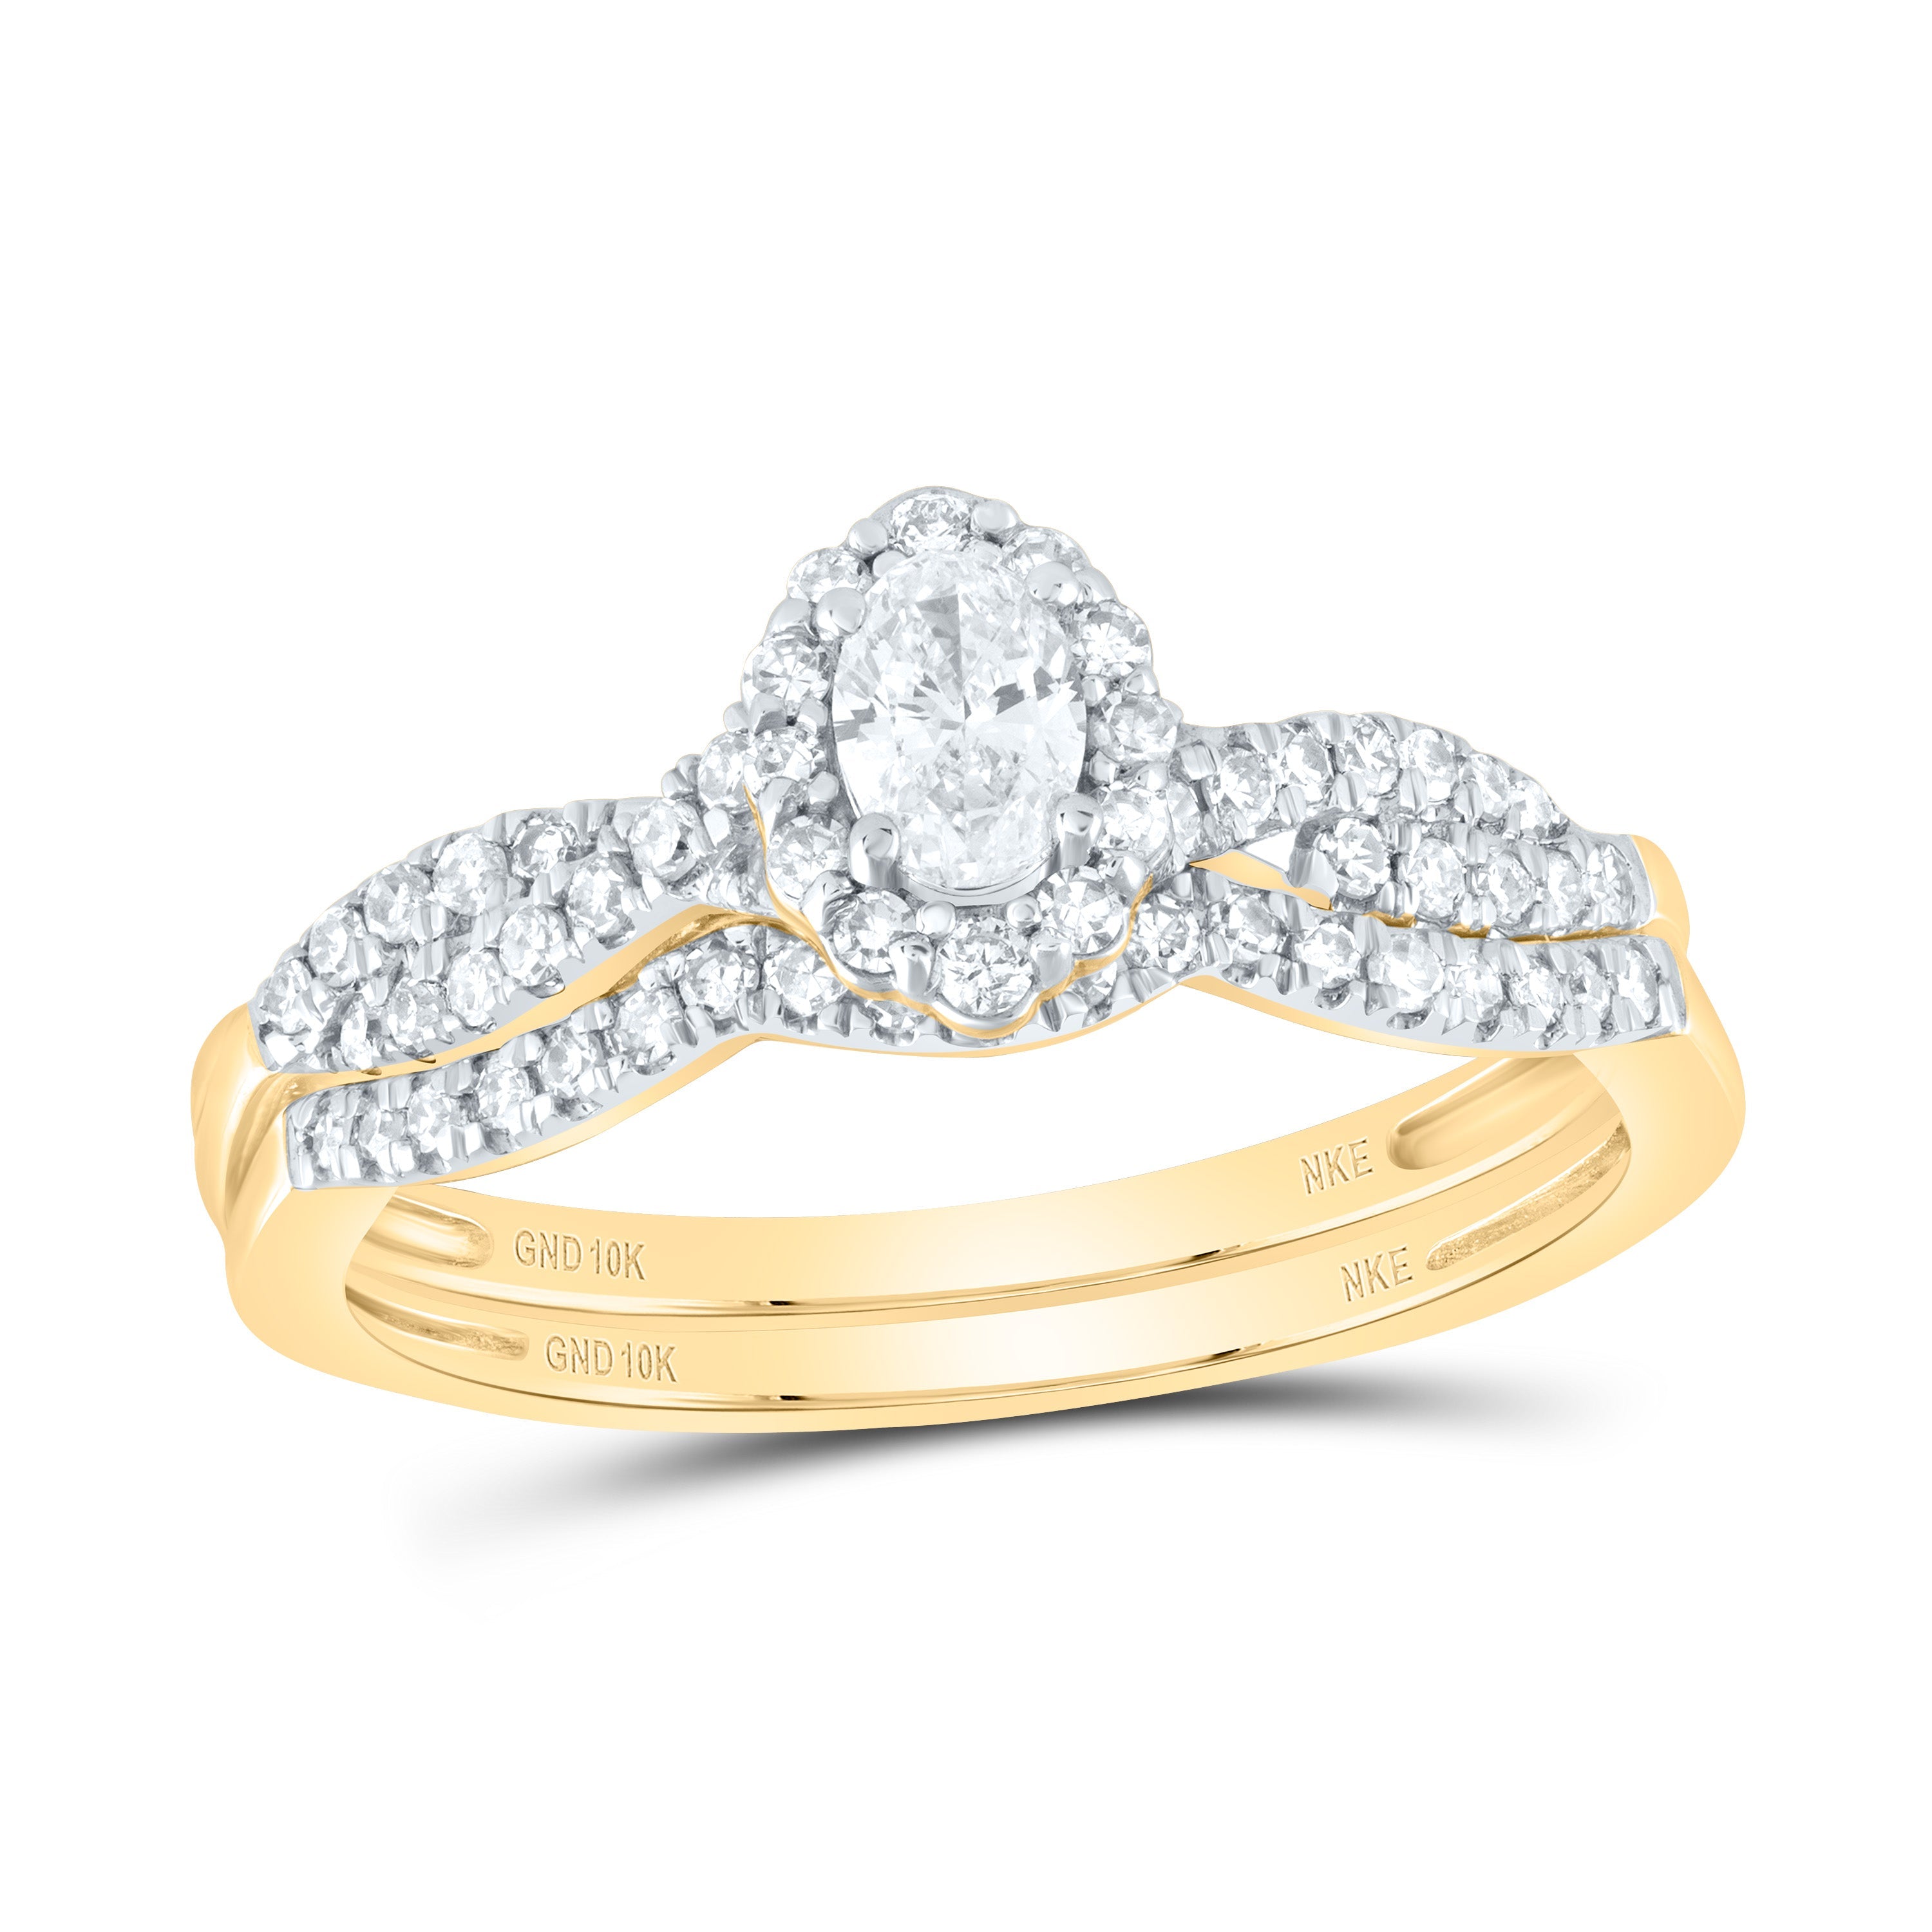 10kt Yellow Gold Oval Diamond Bridal Wedding Ring Band Set 1/2 Cttw